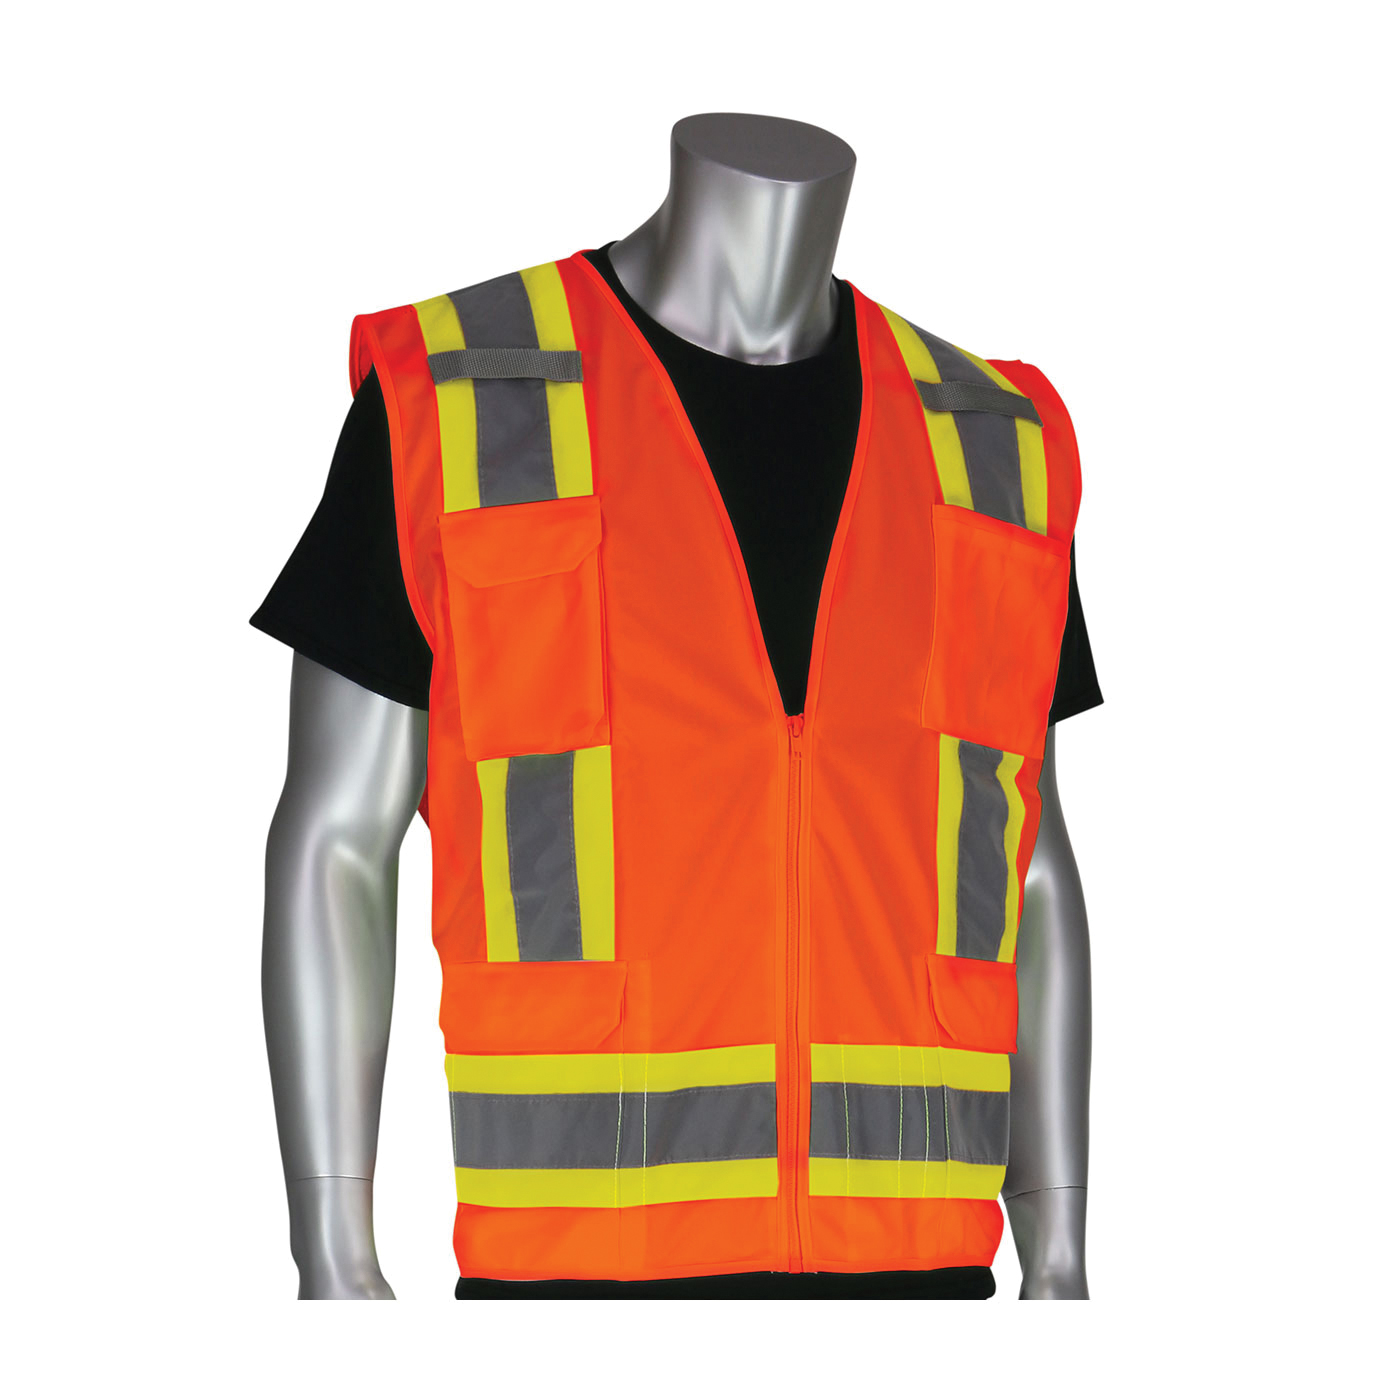 PIP® 302-0500-ORG/2X 2-Tone Surveyor Safety Vest, 2XL, Hi-Viz Orange, Polyester/Solid Tricot, Zipper Closure, 11 Pockets, ANSI Class: Class 2, Specifications Met: ANSI 107 Type R